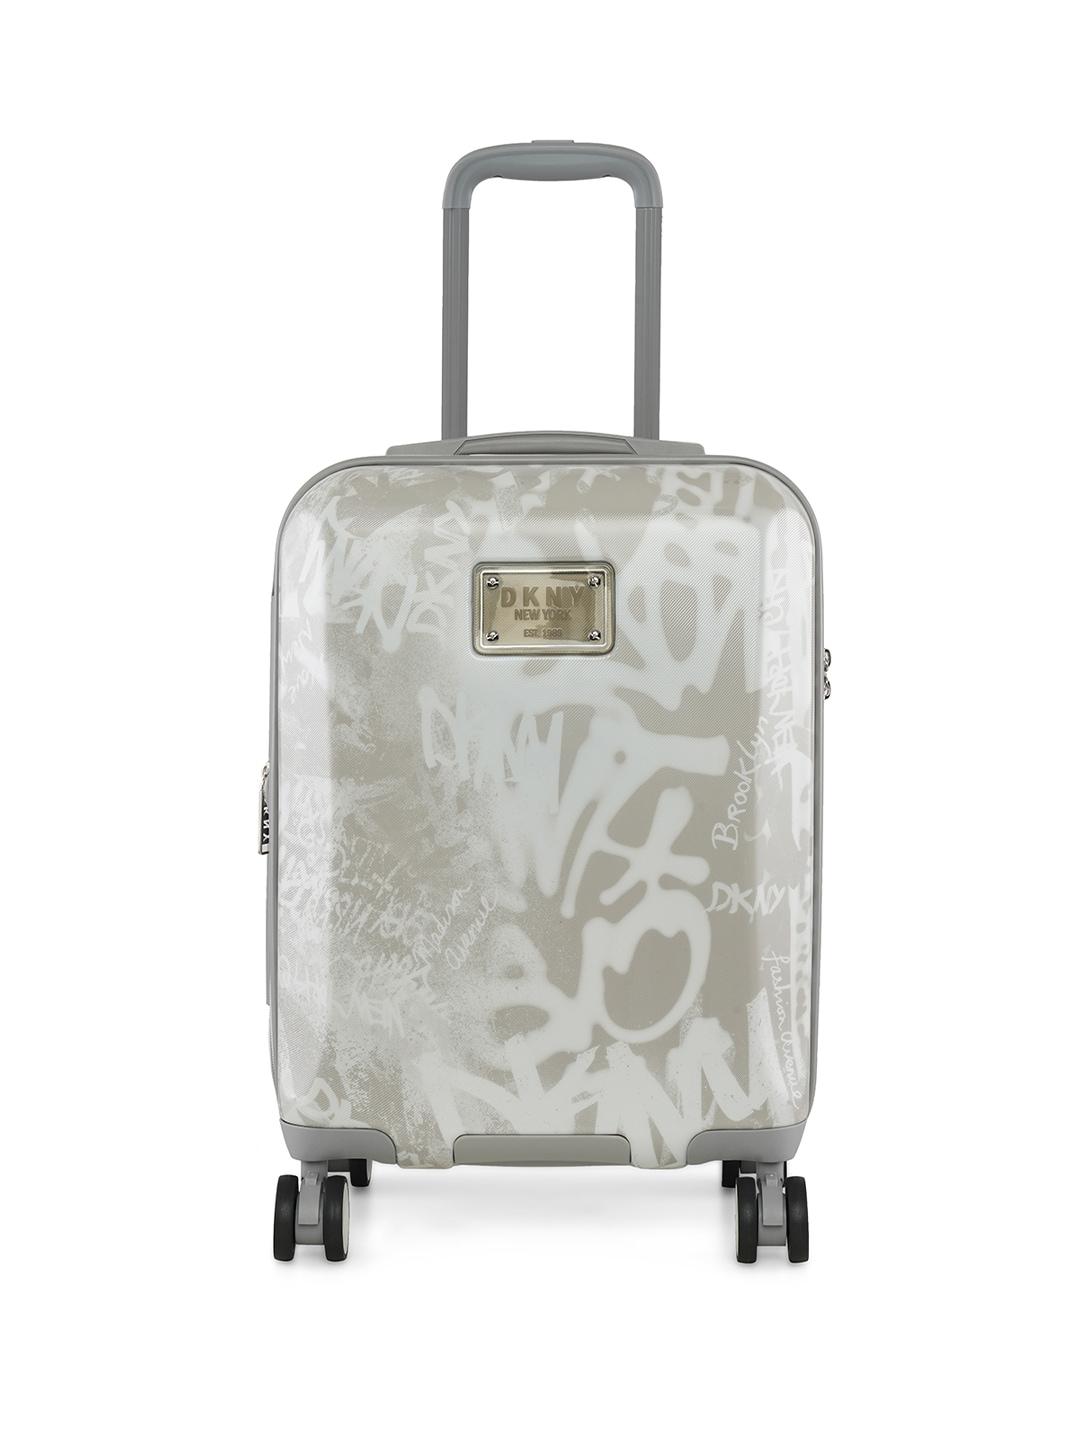 dkny grey printed hard-sided trolley suitcase